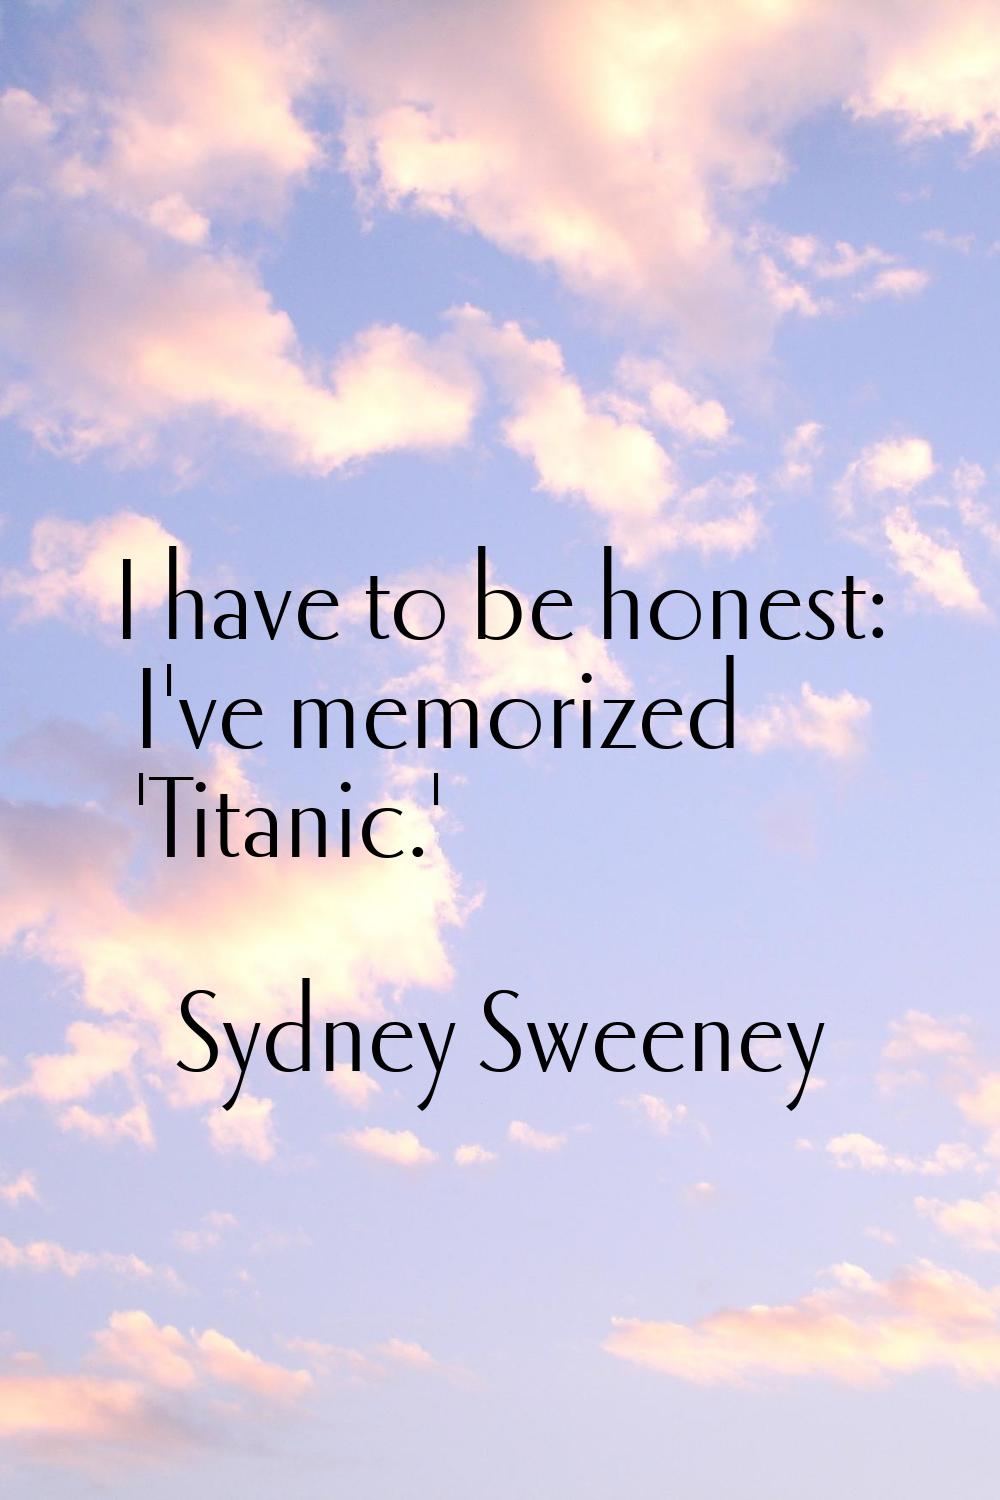 I have to be honest: I've memorized 'Titanic.'